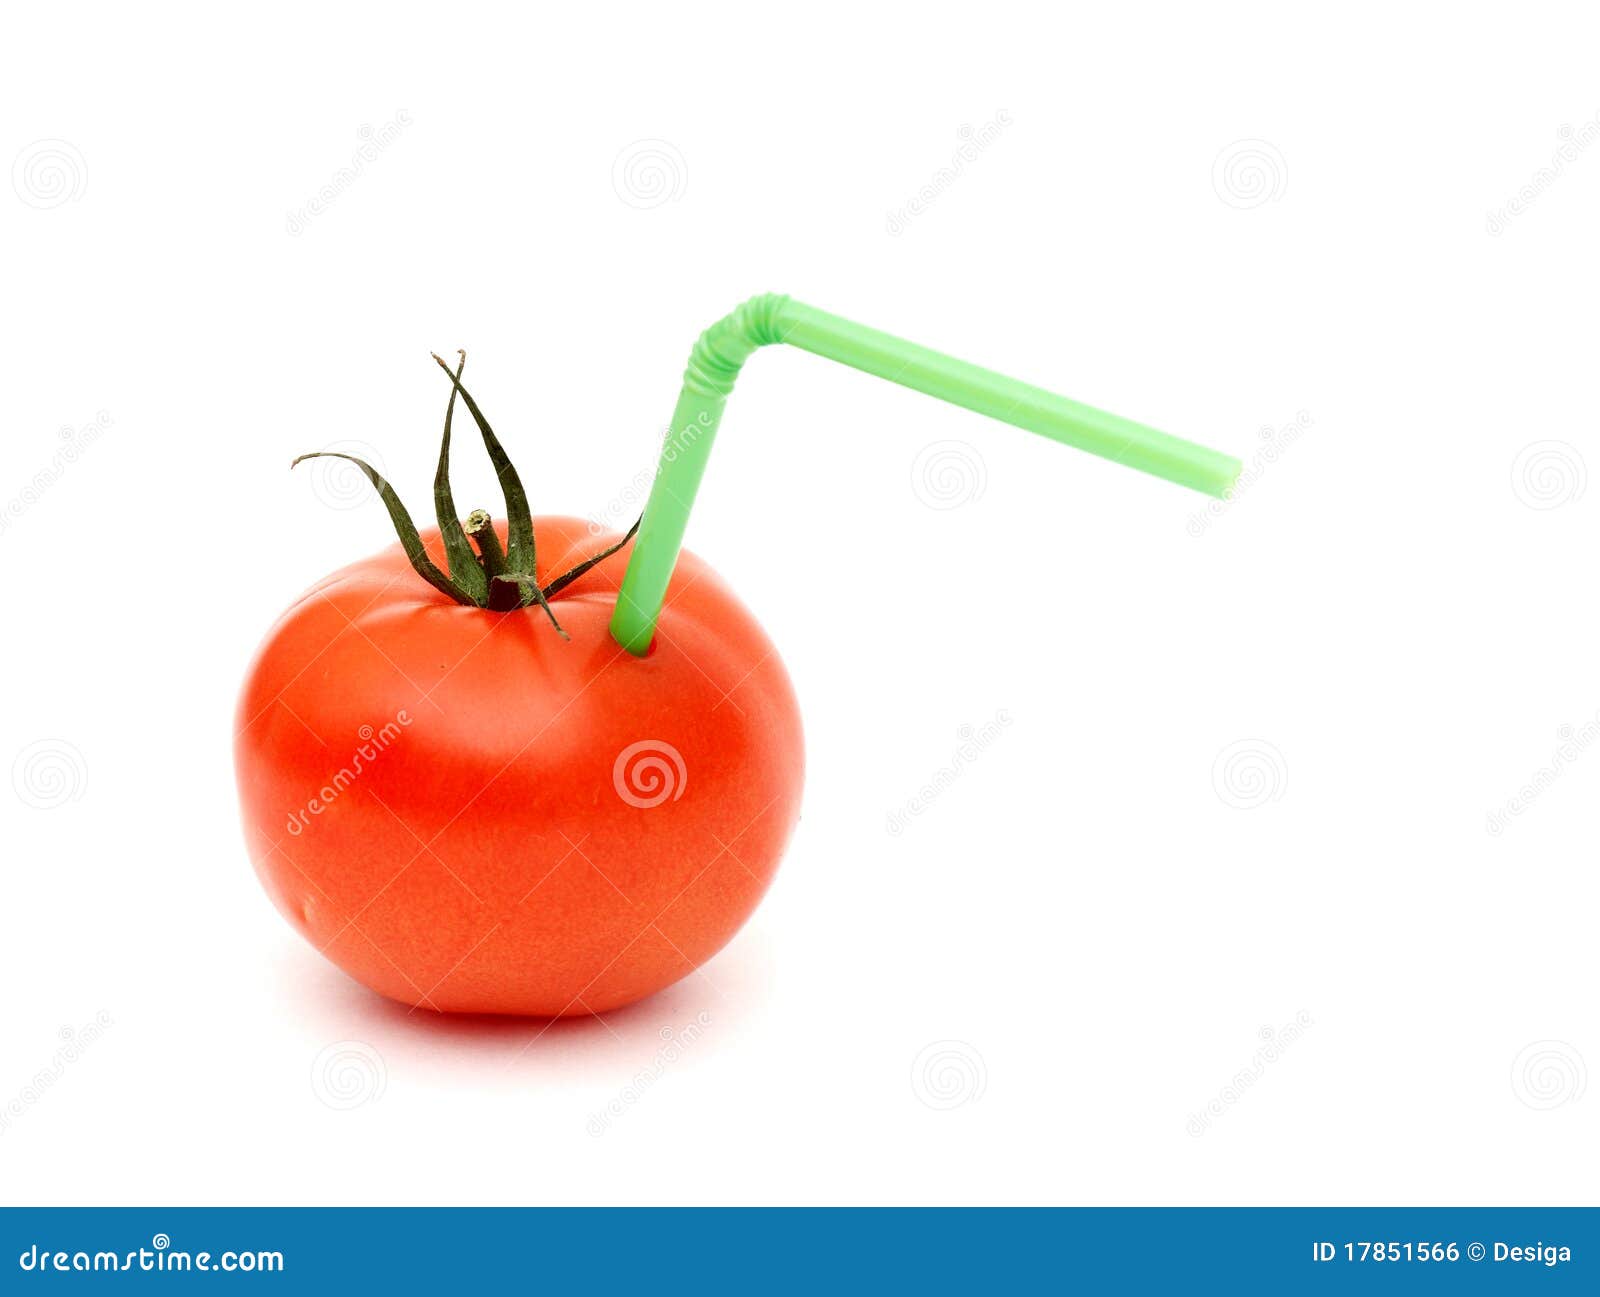 tomato juice clipart - photo #33